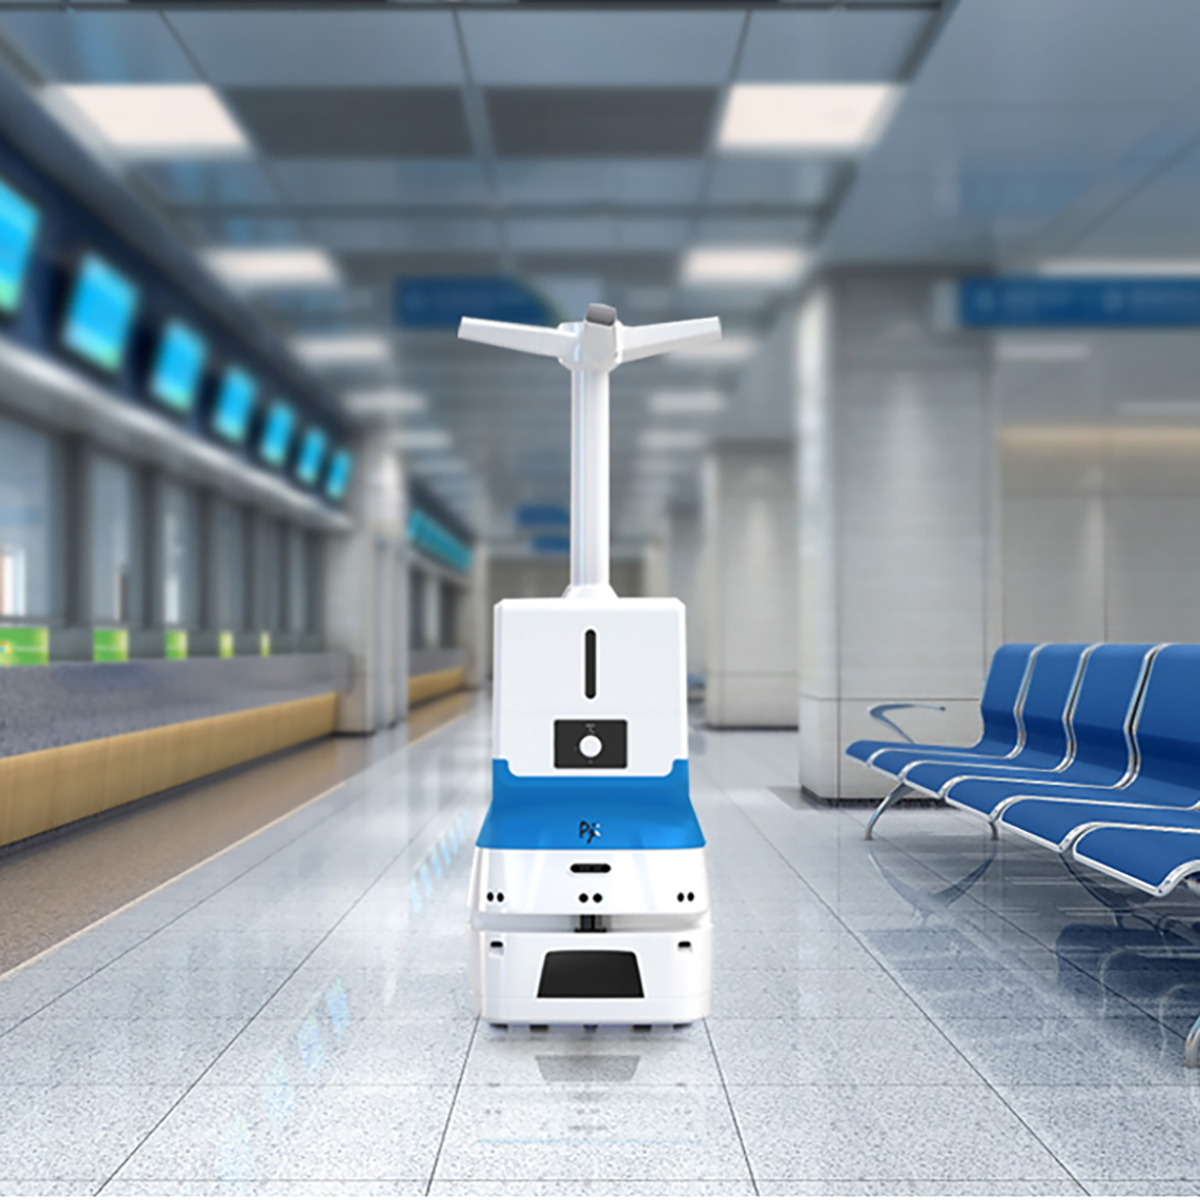 Application scenario of atomizing disinfect robot in hospital